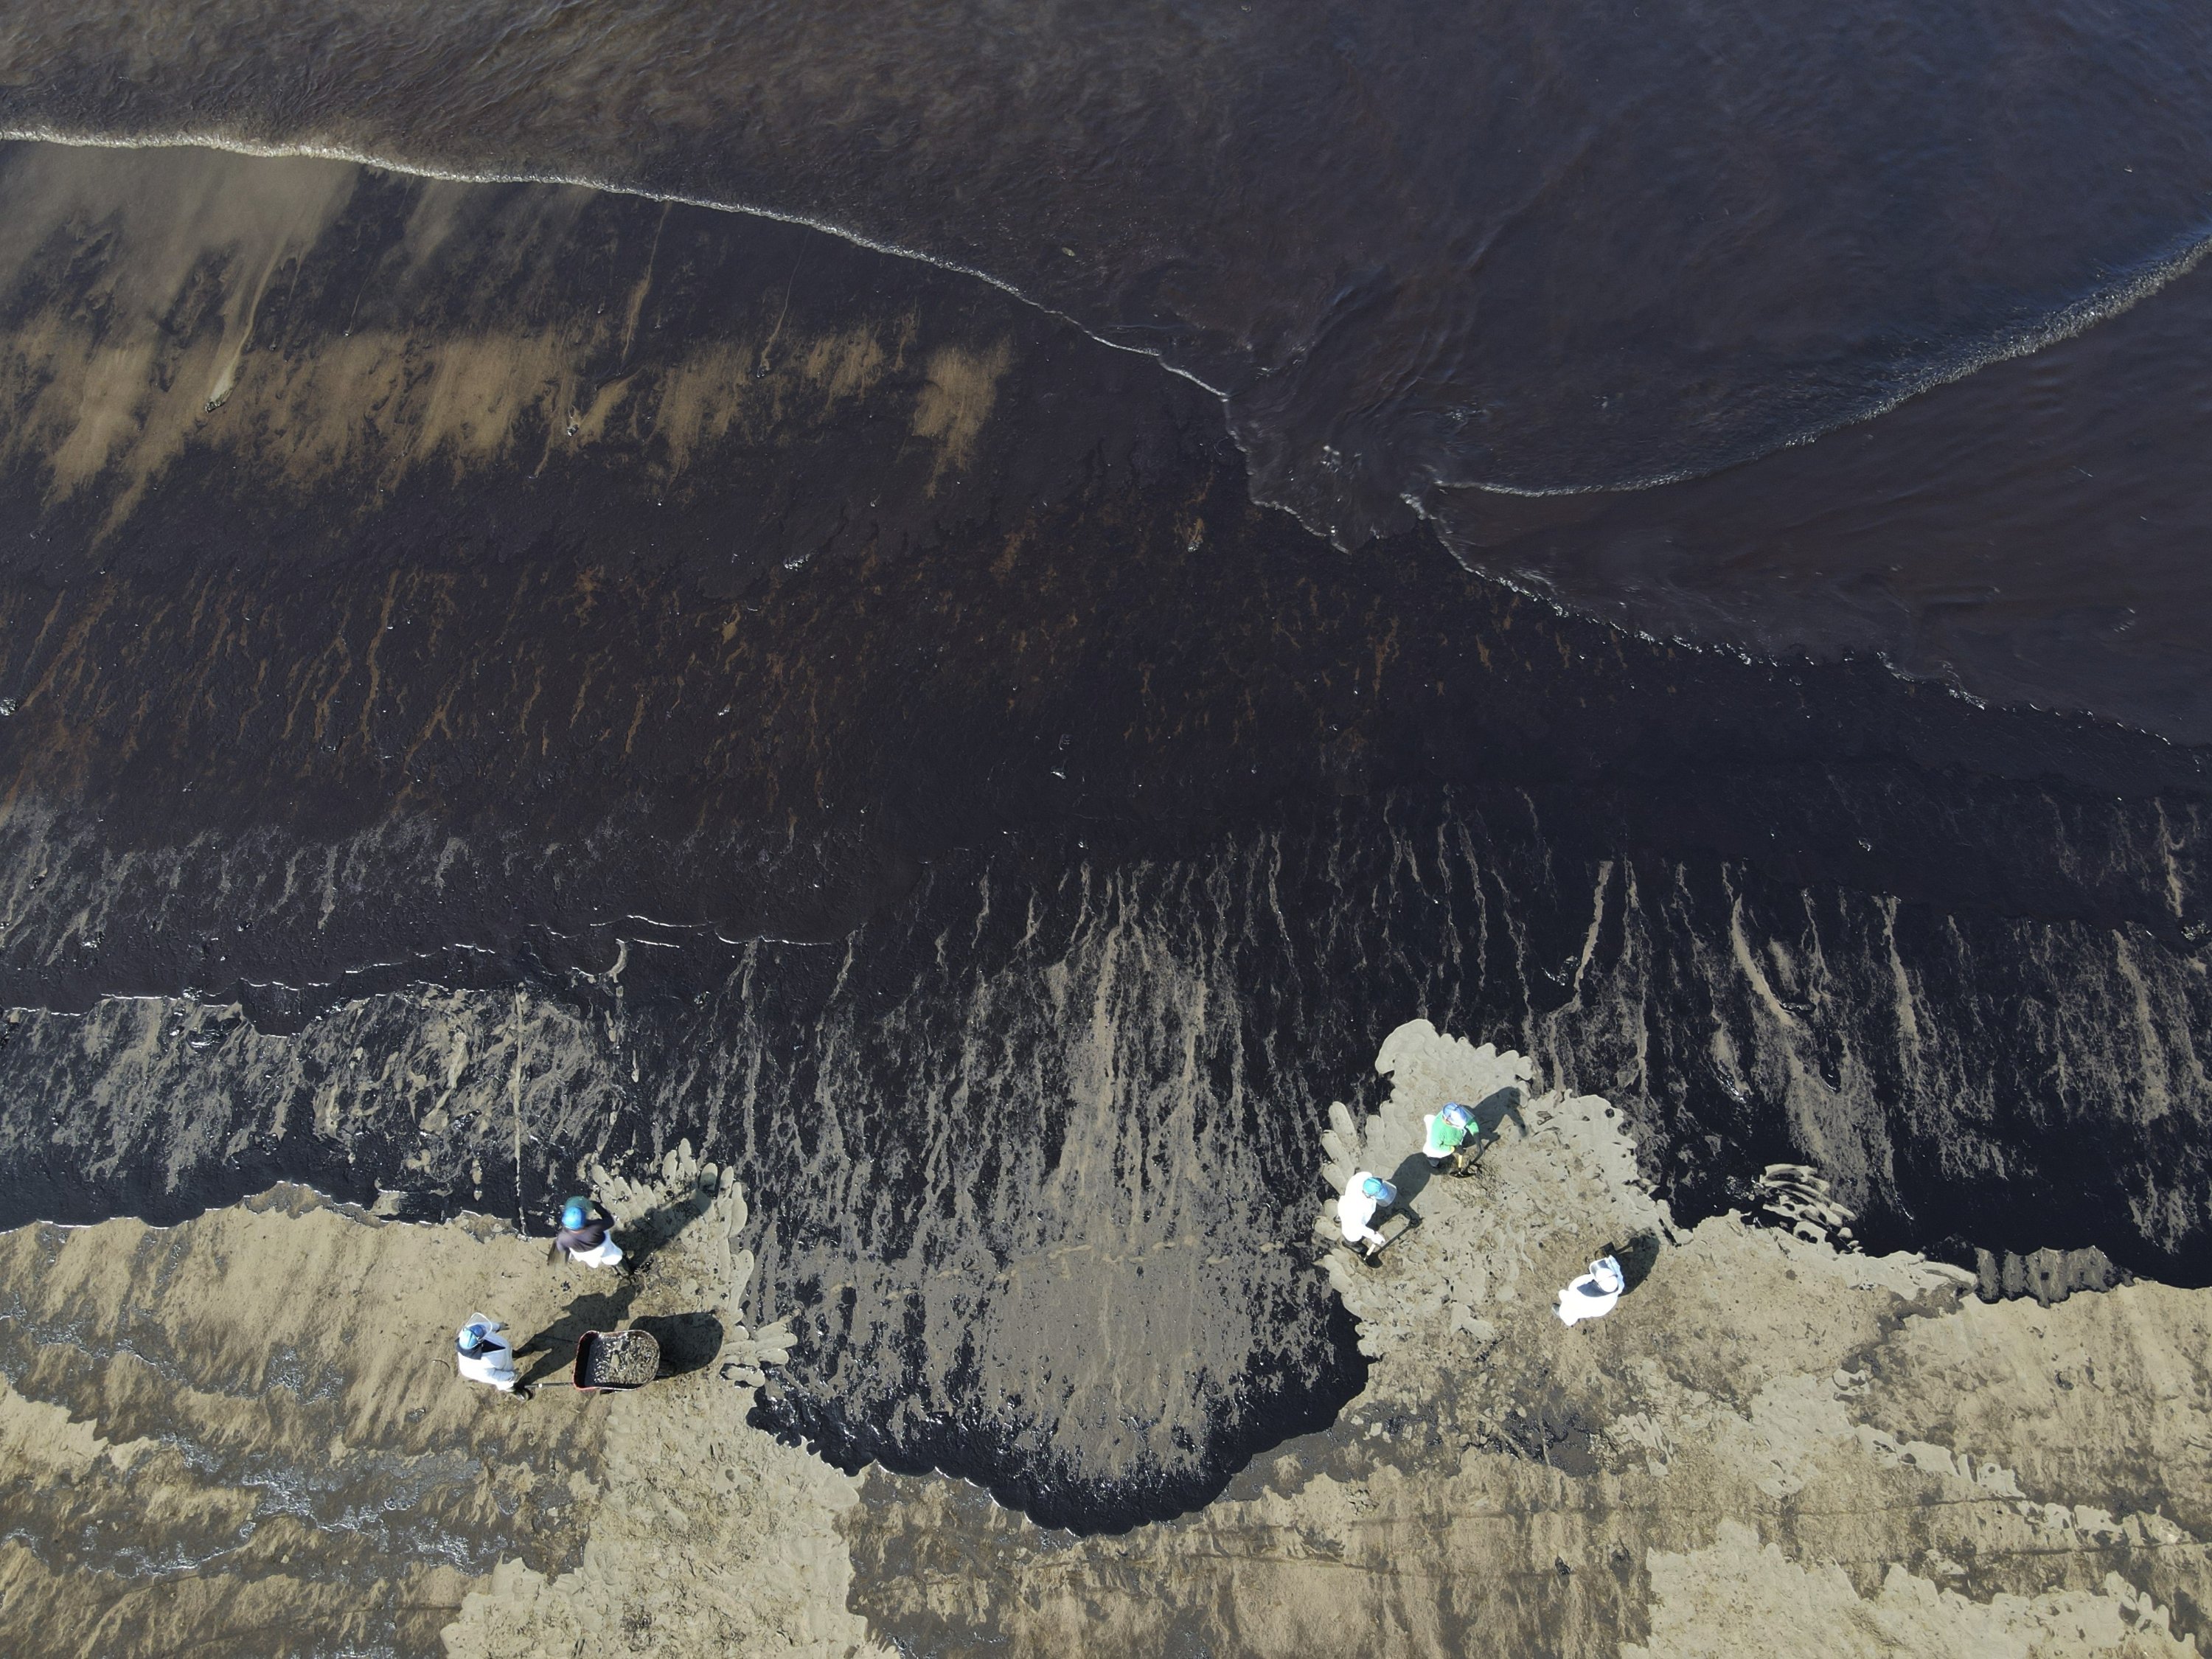 Pekerja membersihkan minyak dari pantai Cavero setelah gelombang tinggi yang disebabkan oleh letusan gunung berapi bawah laut di Tonga menyebabkan tumpahan minyak di Ventanilla, Callao, Peru, 18 Januari 2022. (AP Photo)